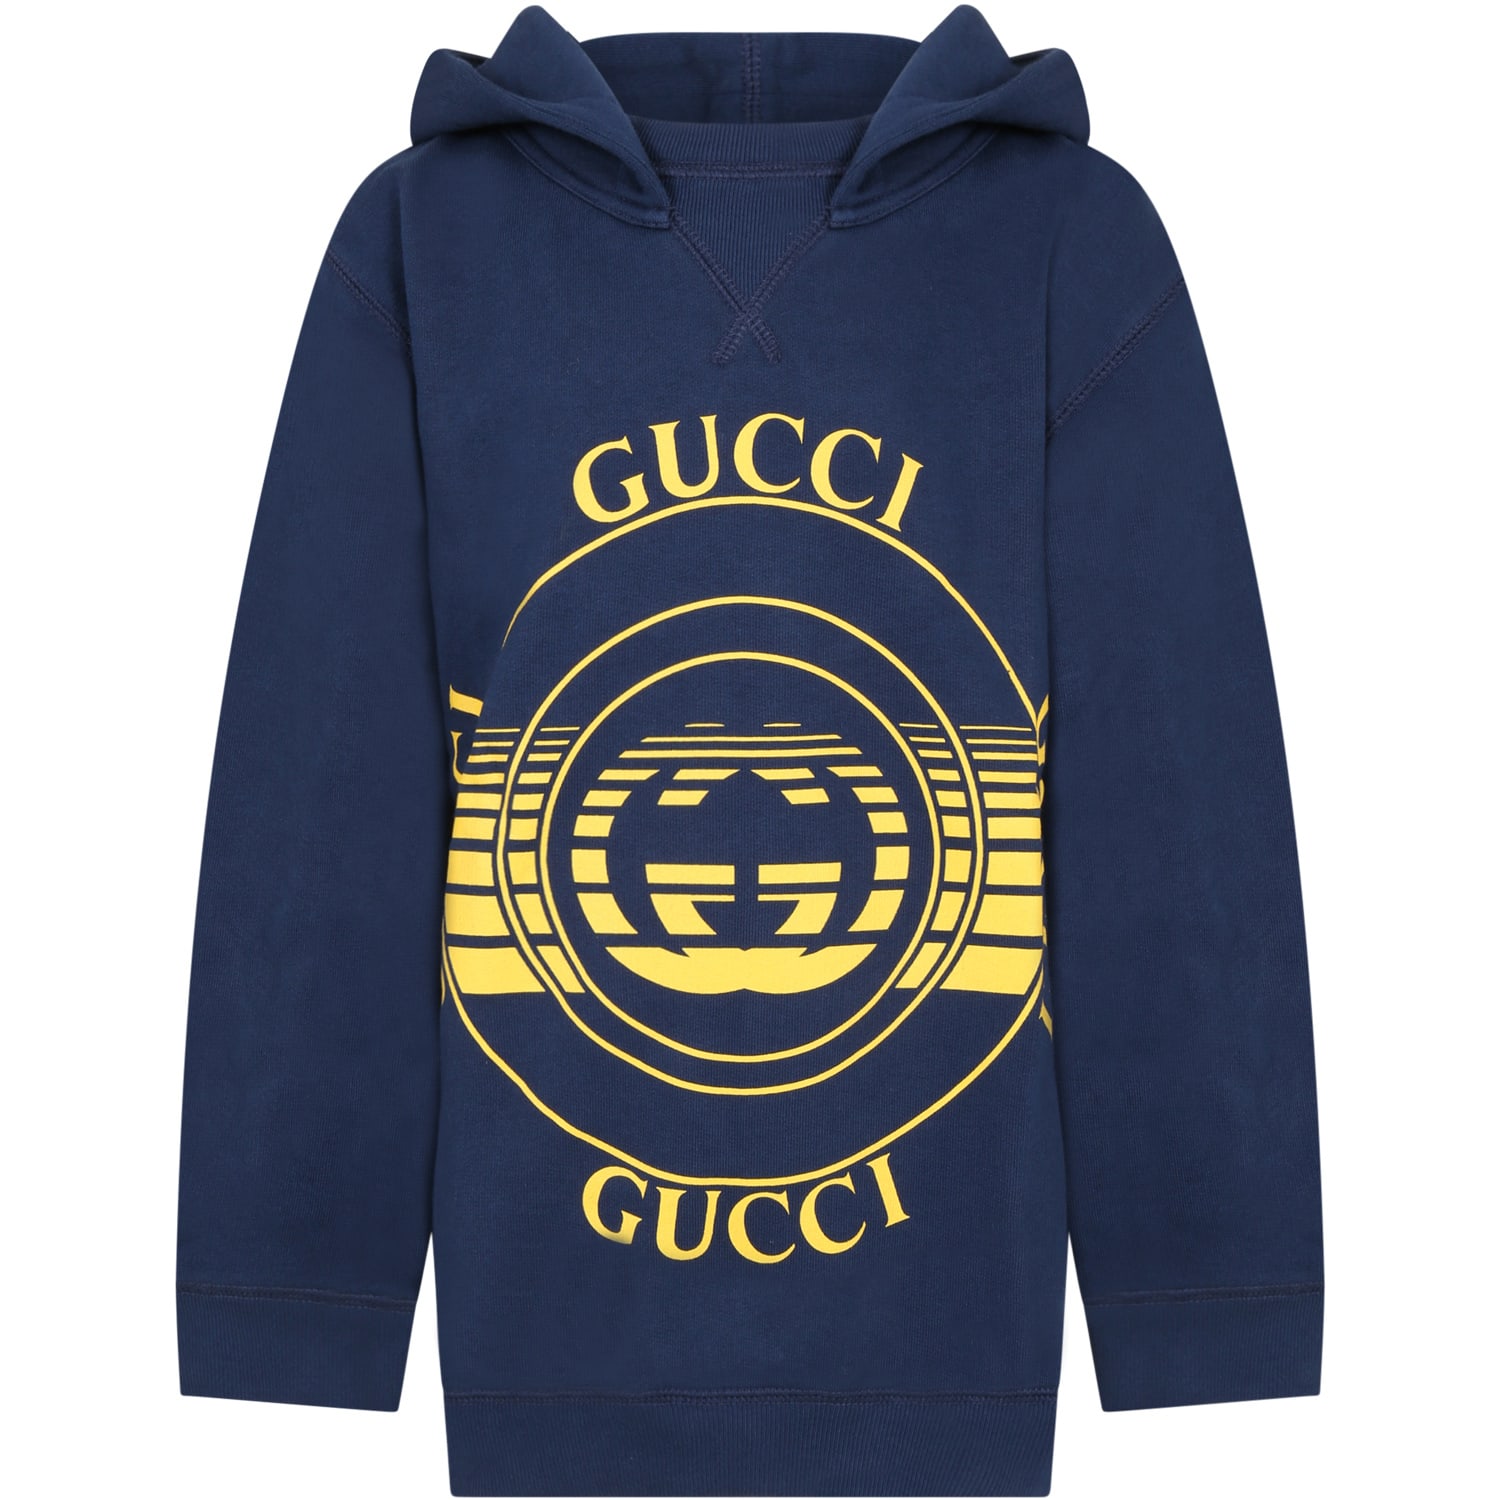 Gucci Blue Sweatshirt For Babykids With Logos